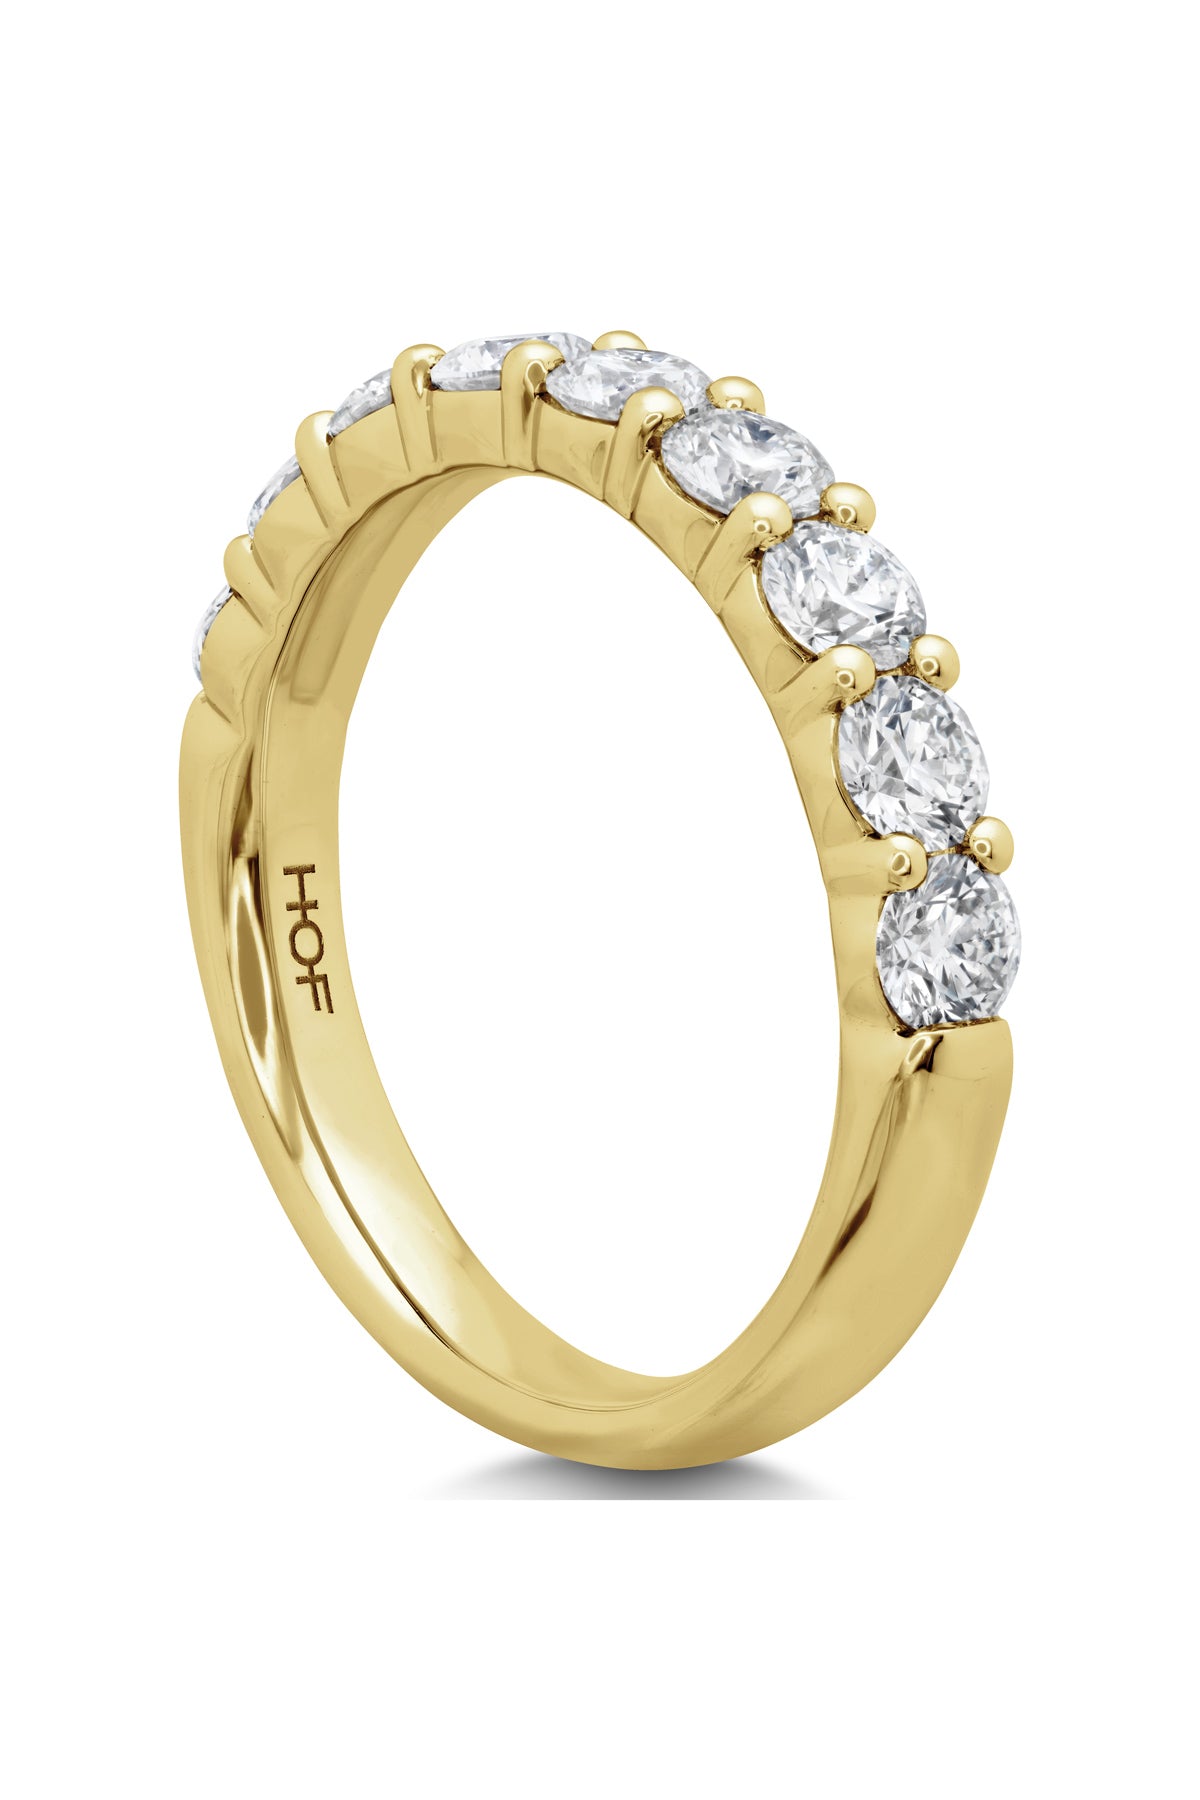 18ct yellow gold, diamond set nine stone ring - Nicholas Wylde